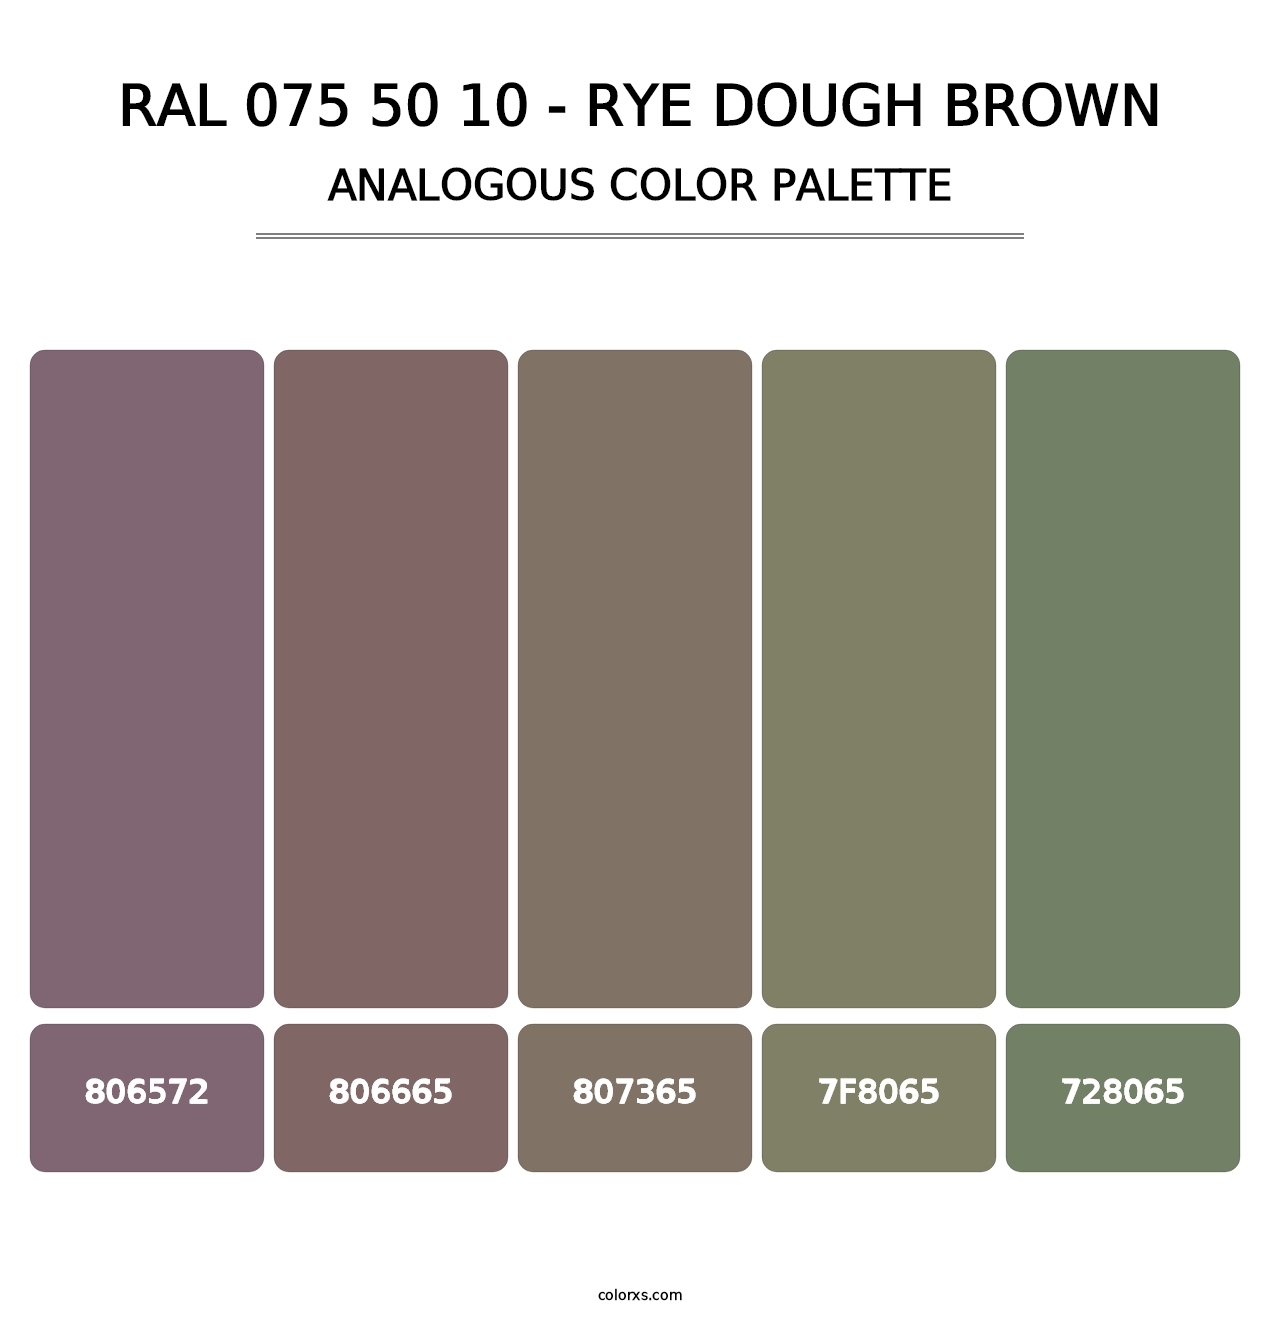 RAL 075 50 10 - Rye Dough Brown - Analogous Color Palette